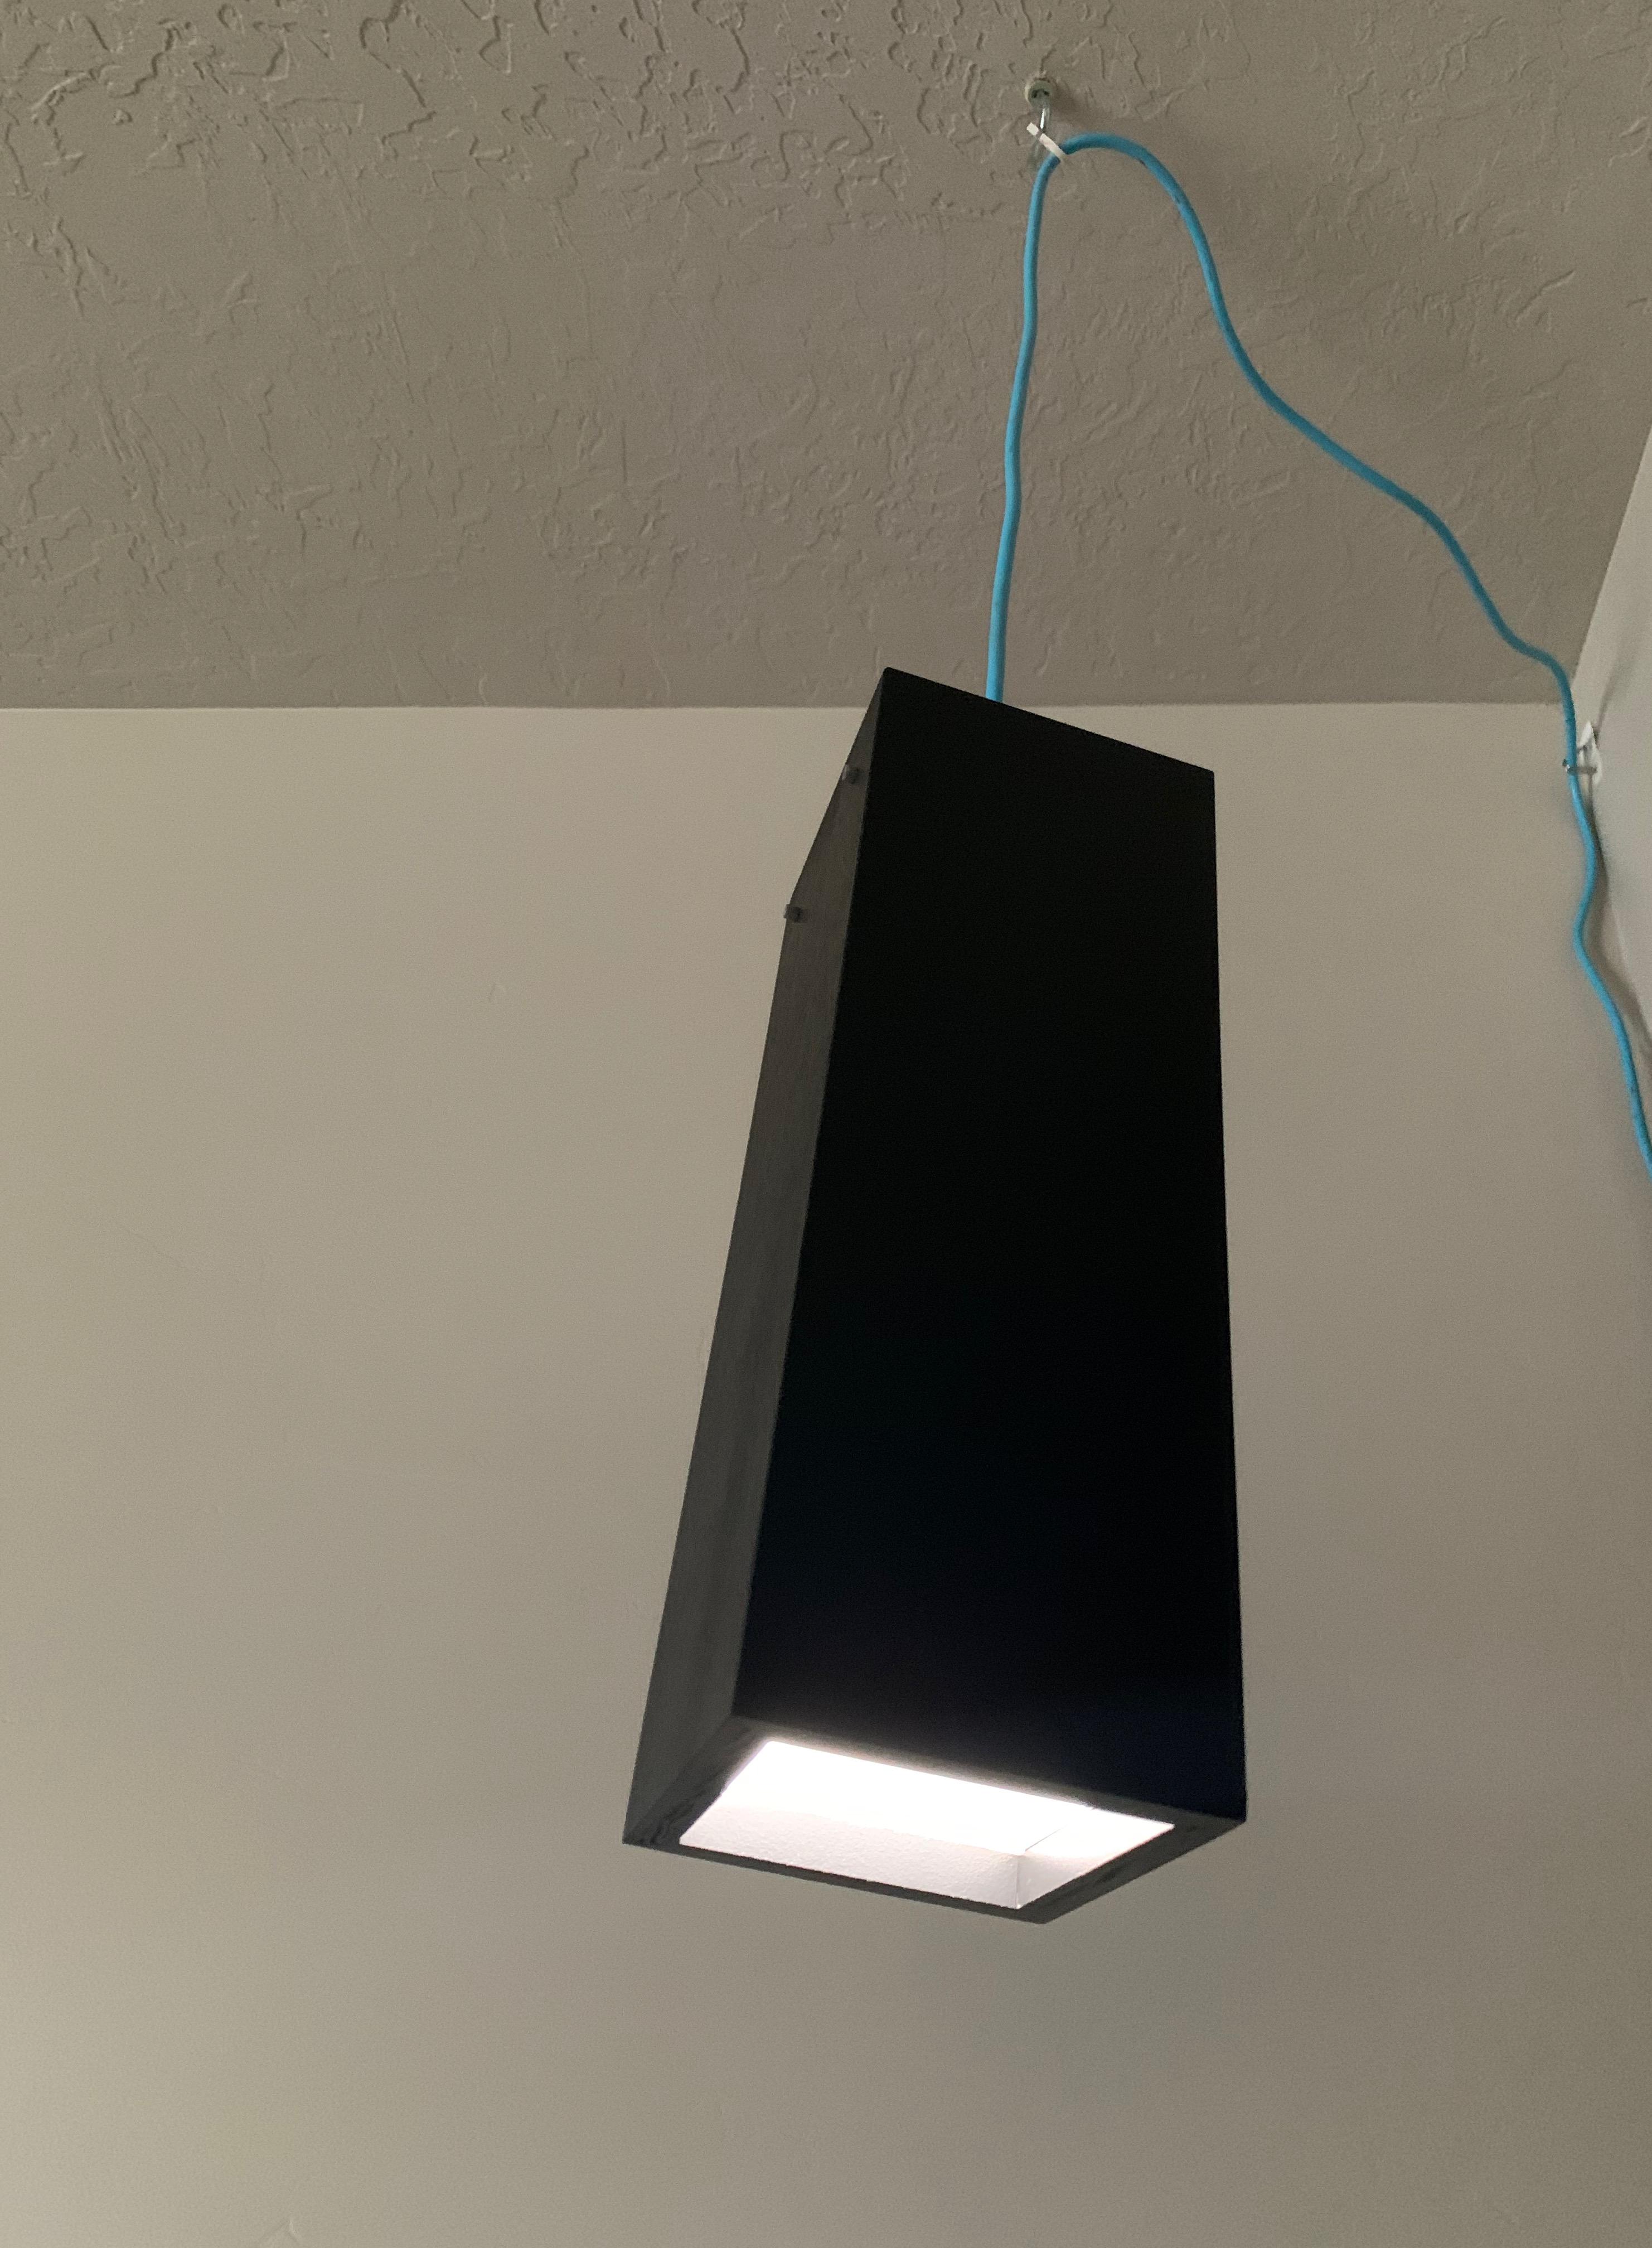 Pendant Lamp - 2 of 2.jpeg